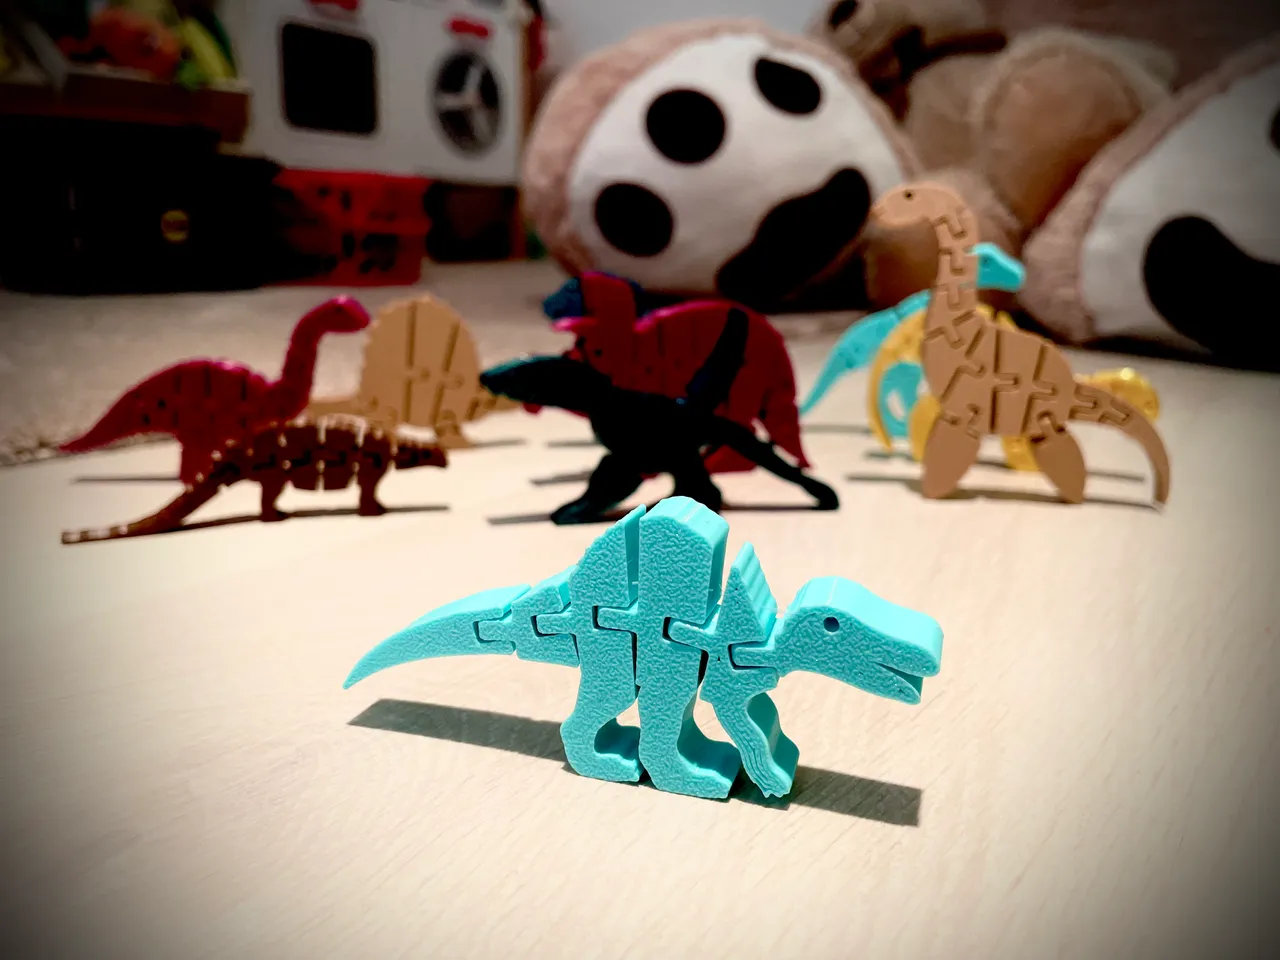 Dinosaur Key Chain Toy, Fidget Toy, Game Toys, 3d Dino